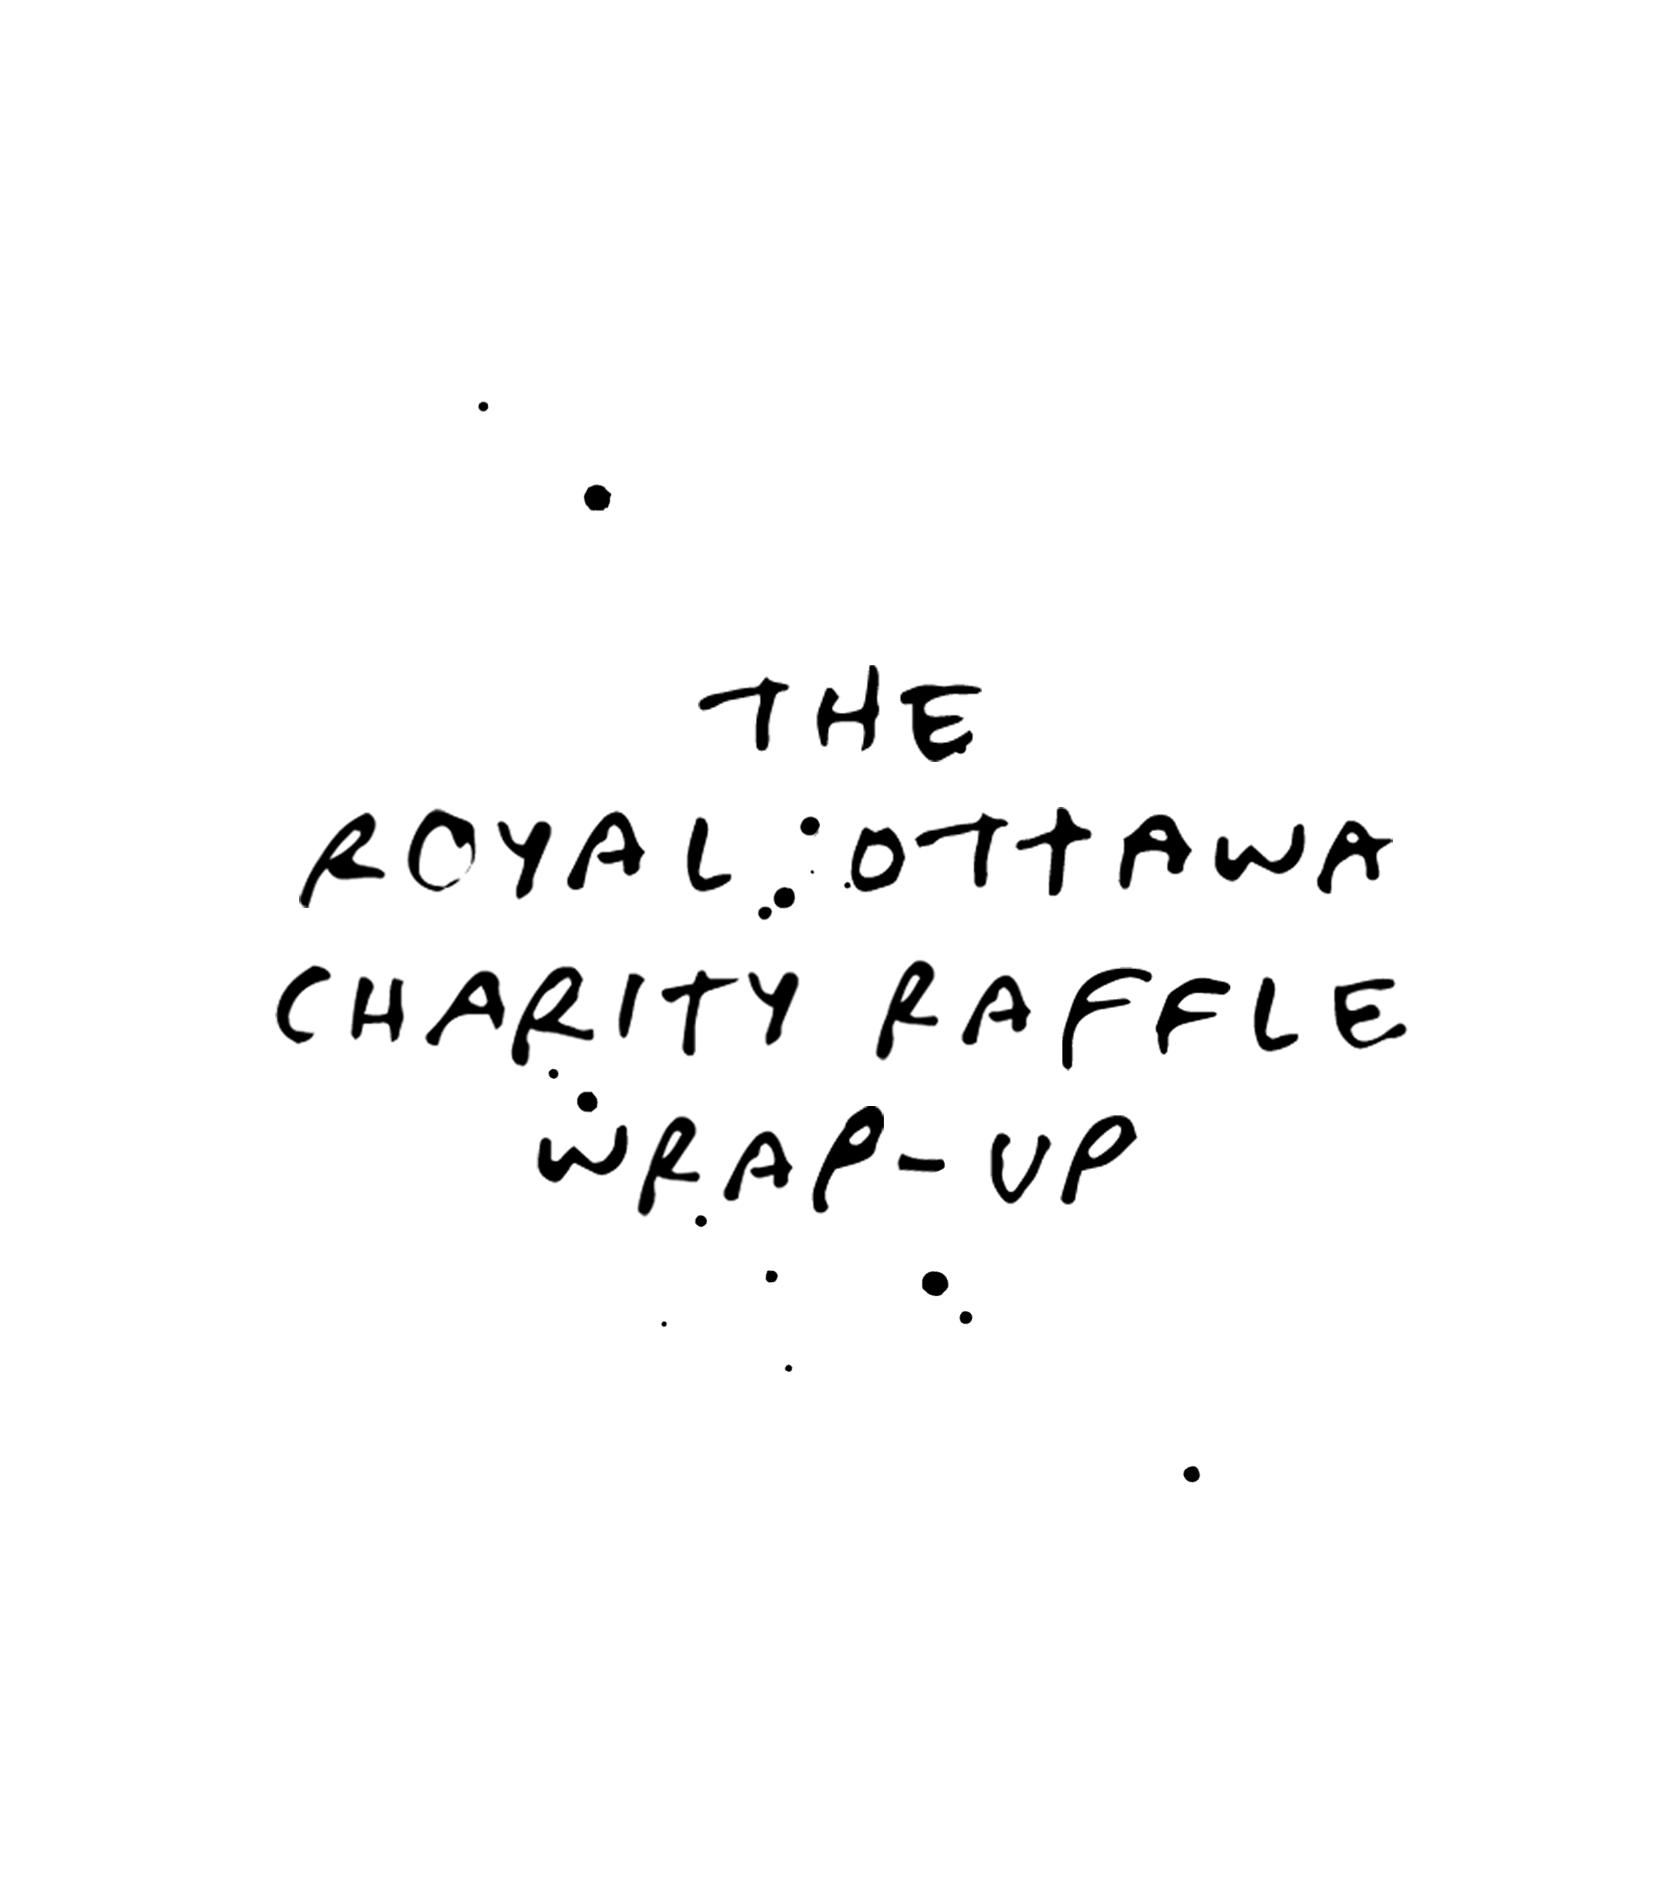 Royal Ottawa Charity Fundraiser Announcement